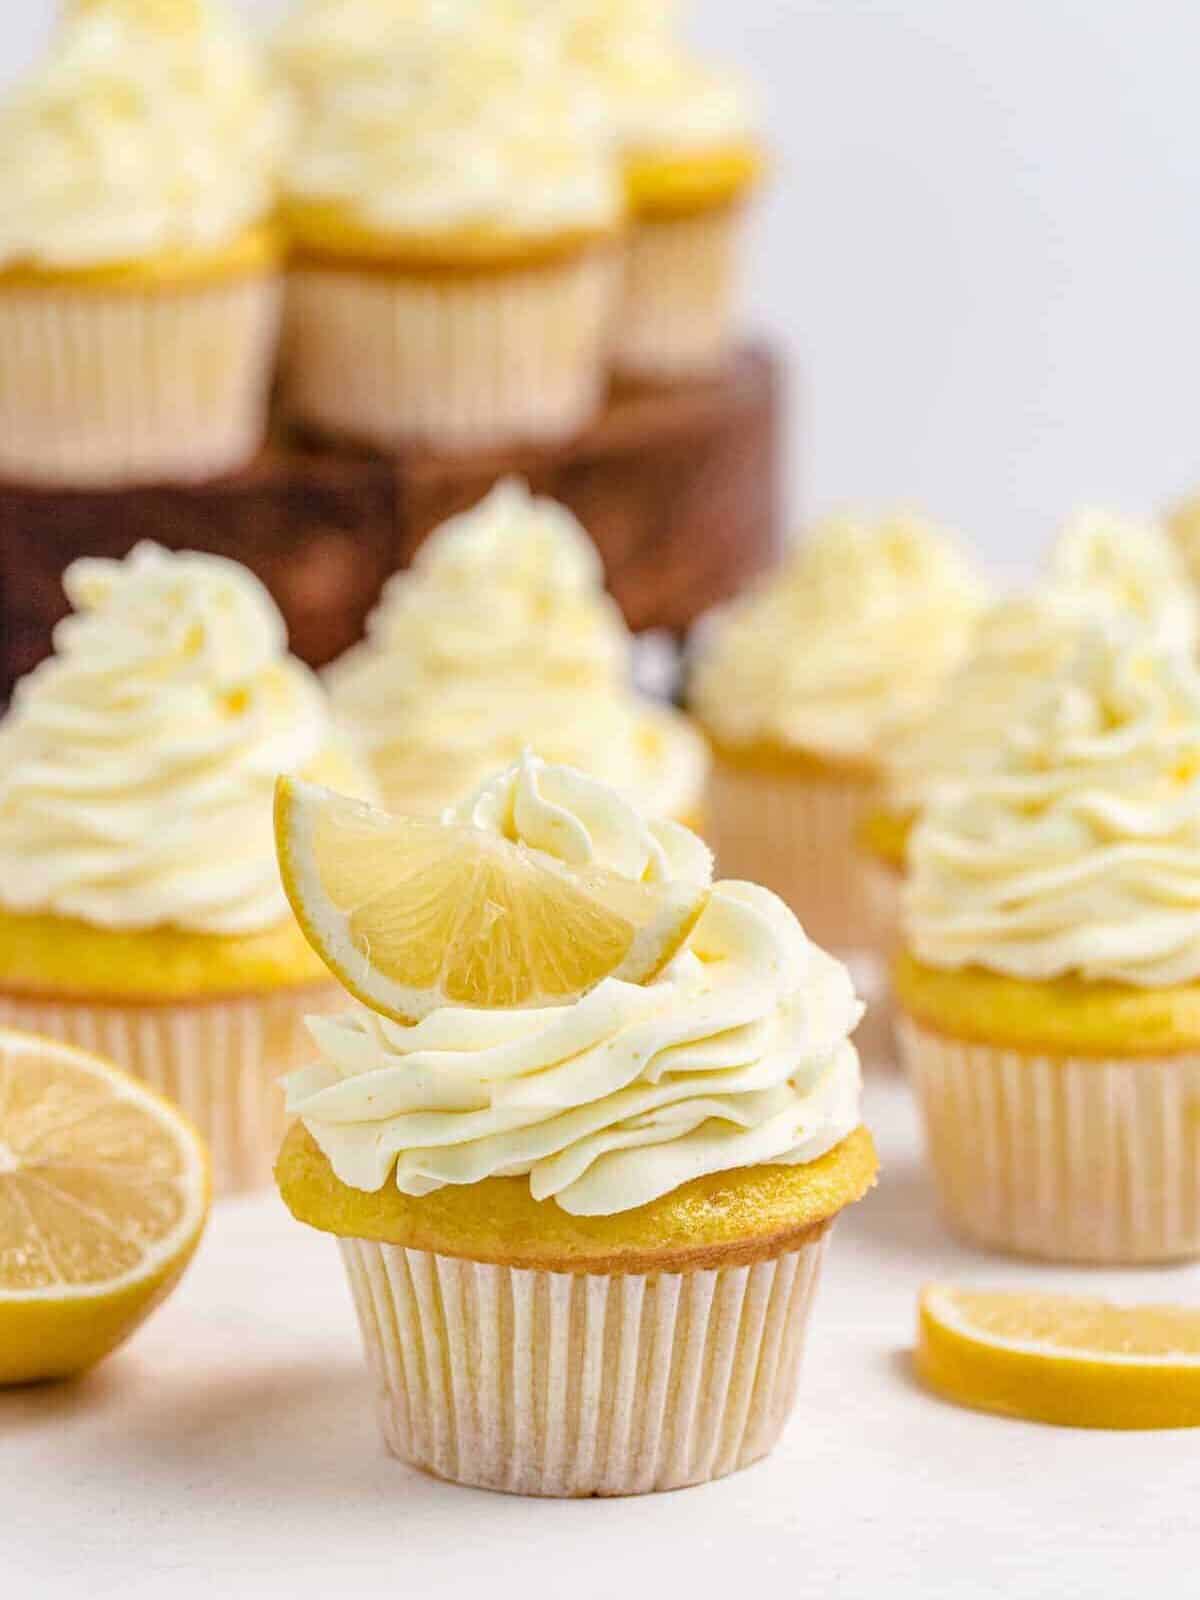 lemon cupcakes with lemon slices